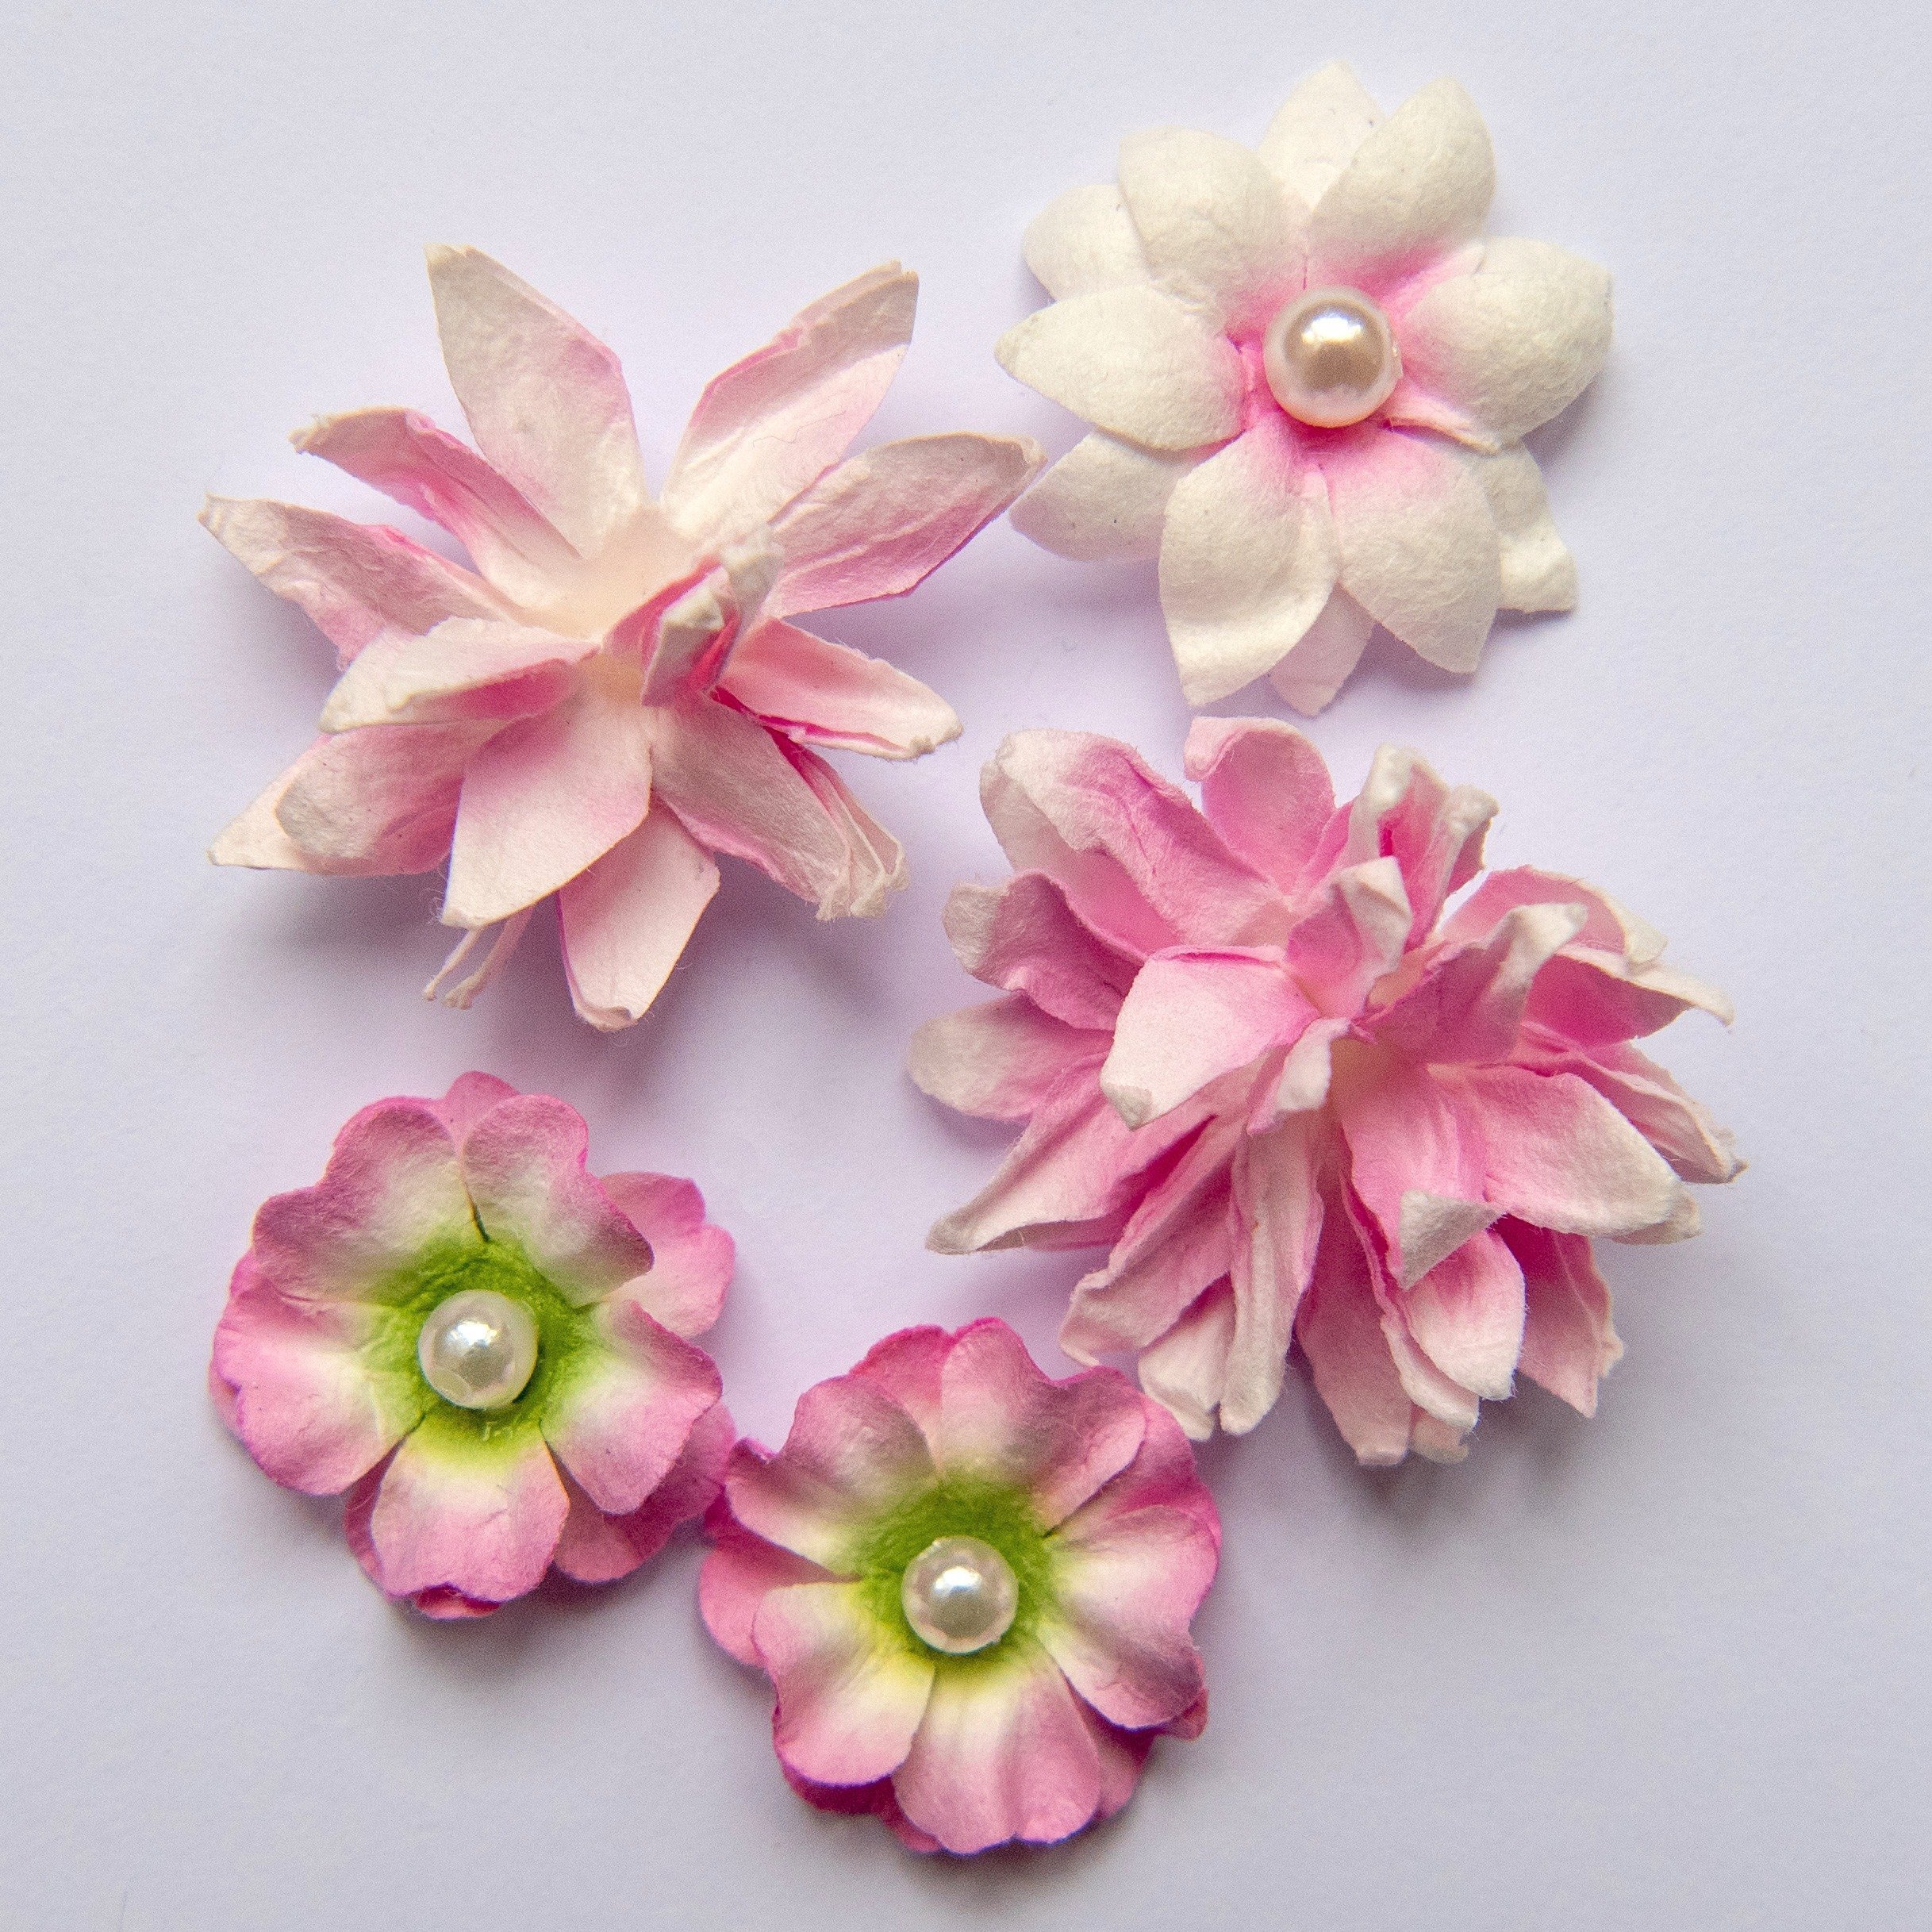 Flowers Mini Series 01 - Blush